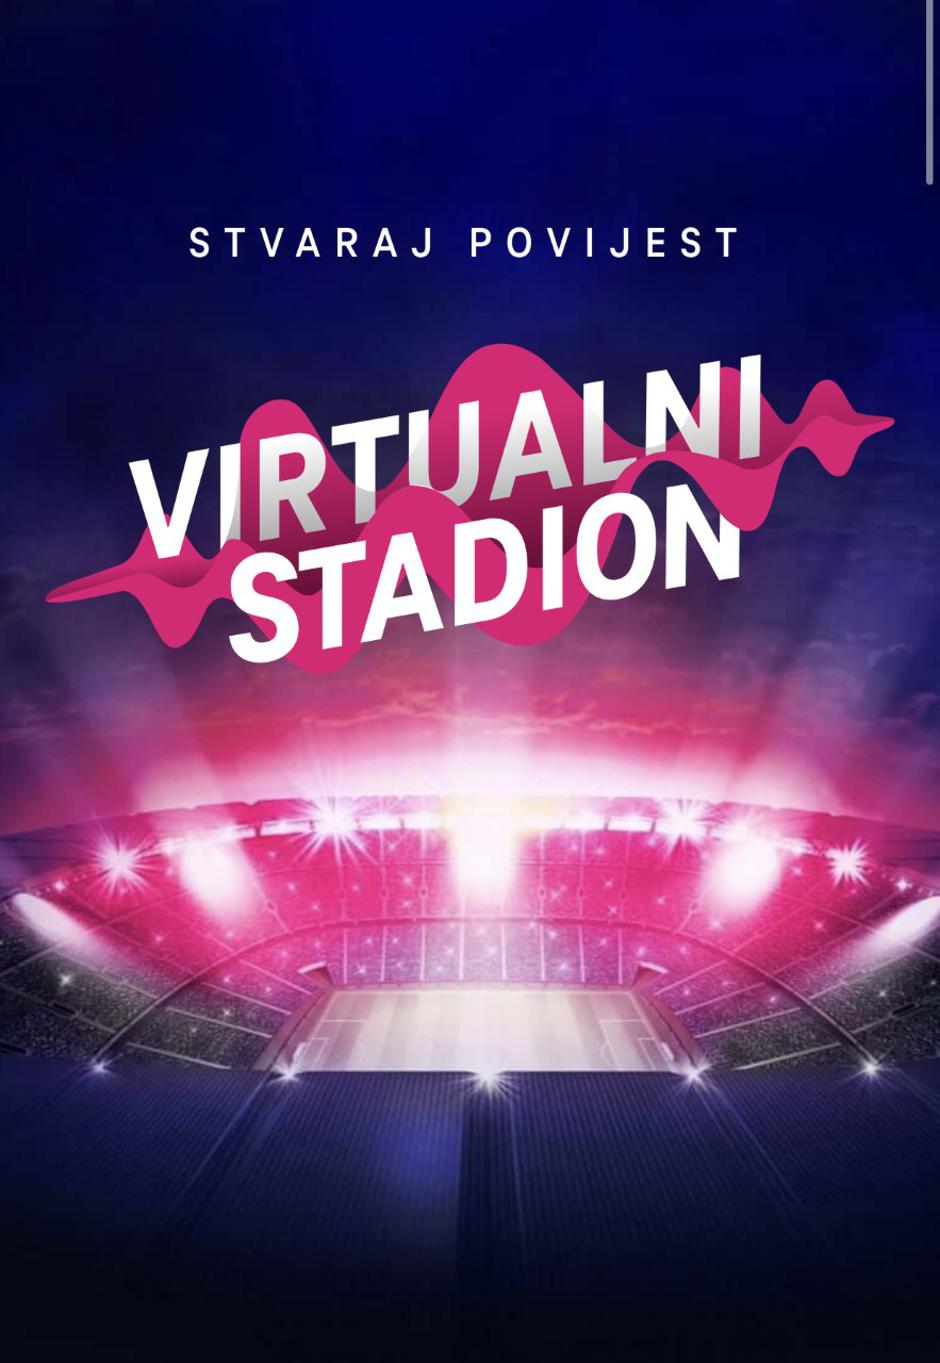 Virtualni stadion